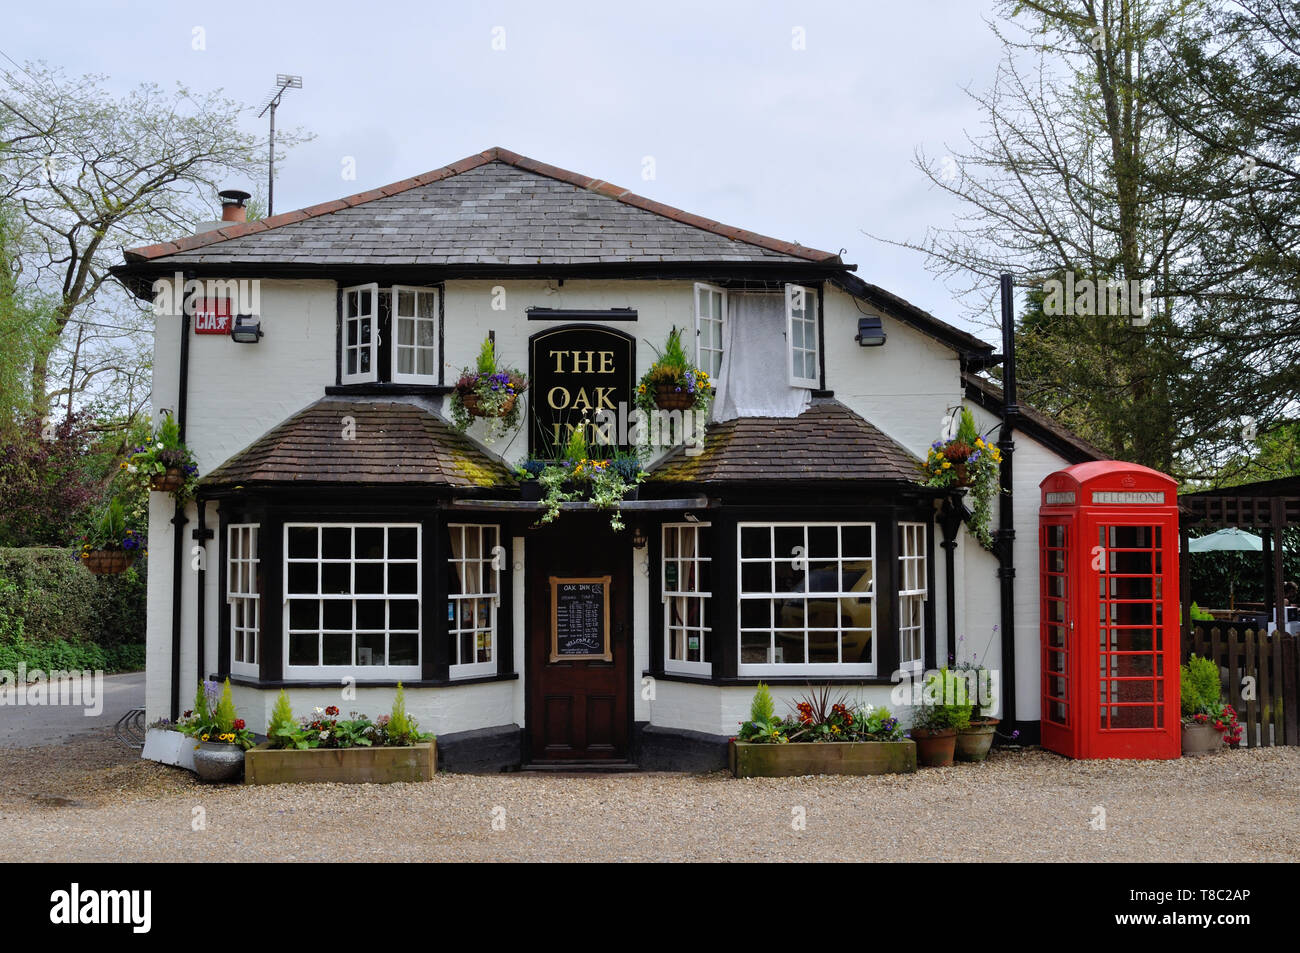 The Oak Inn, a Fuller's pub near Lyndhurst in the New Forest Stock Photo